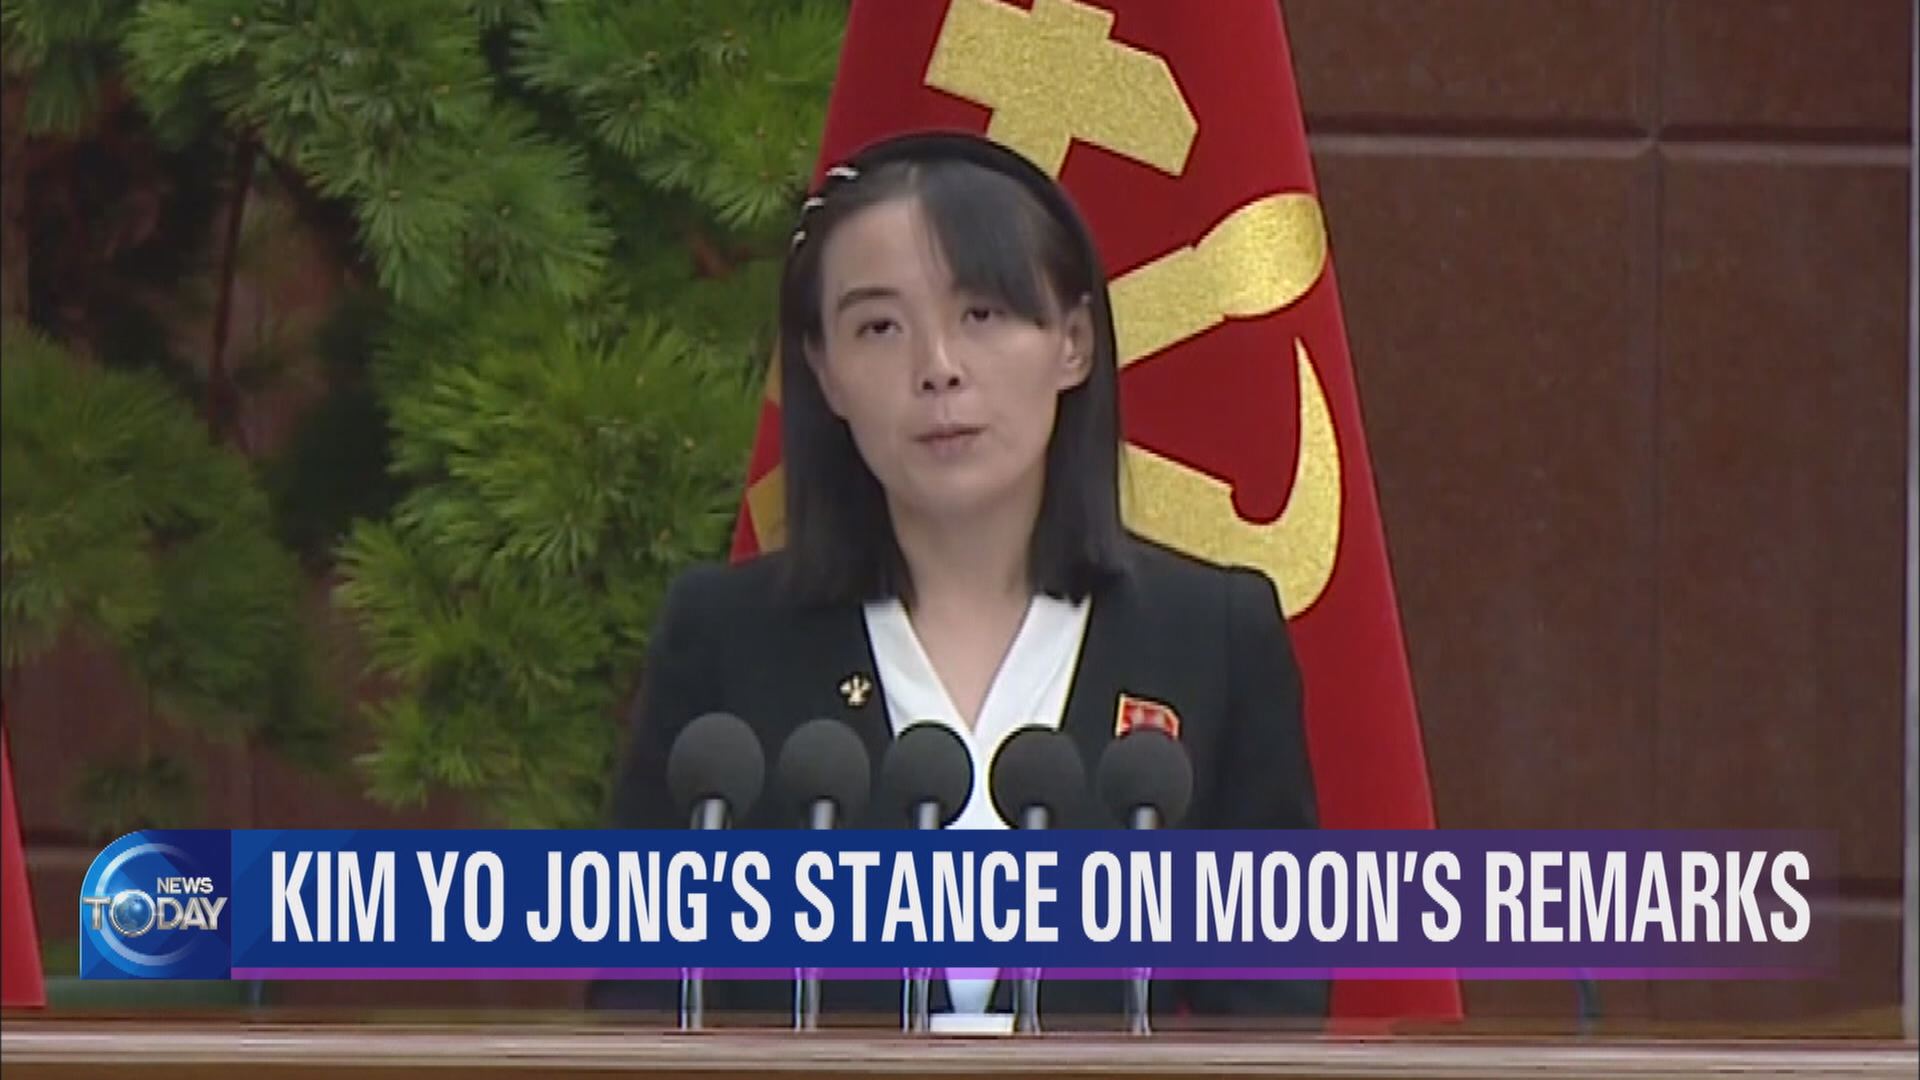 KIM YO JONG'S STANCE ON MOON'S REMARKS